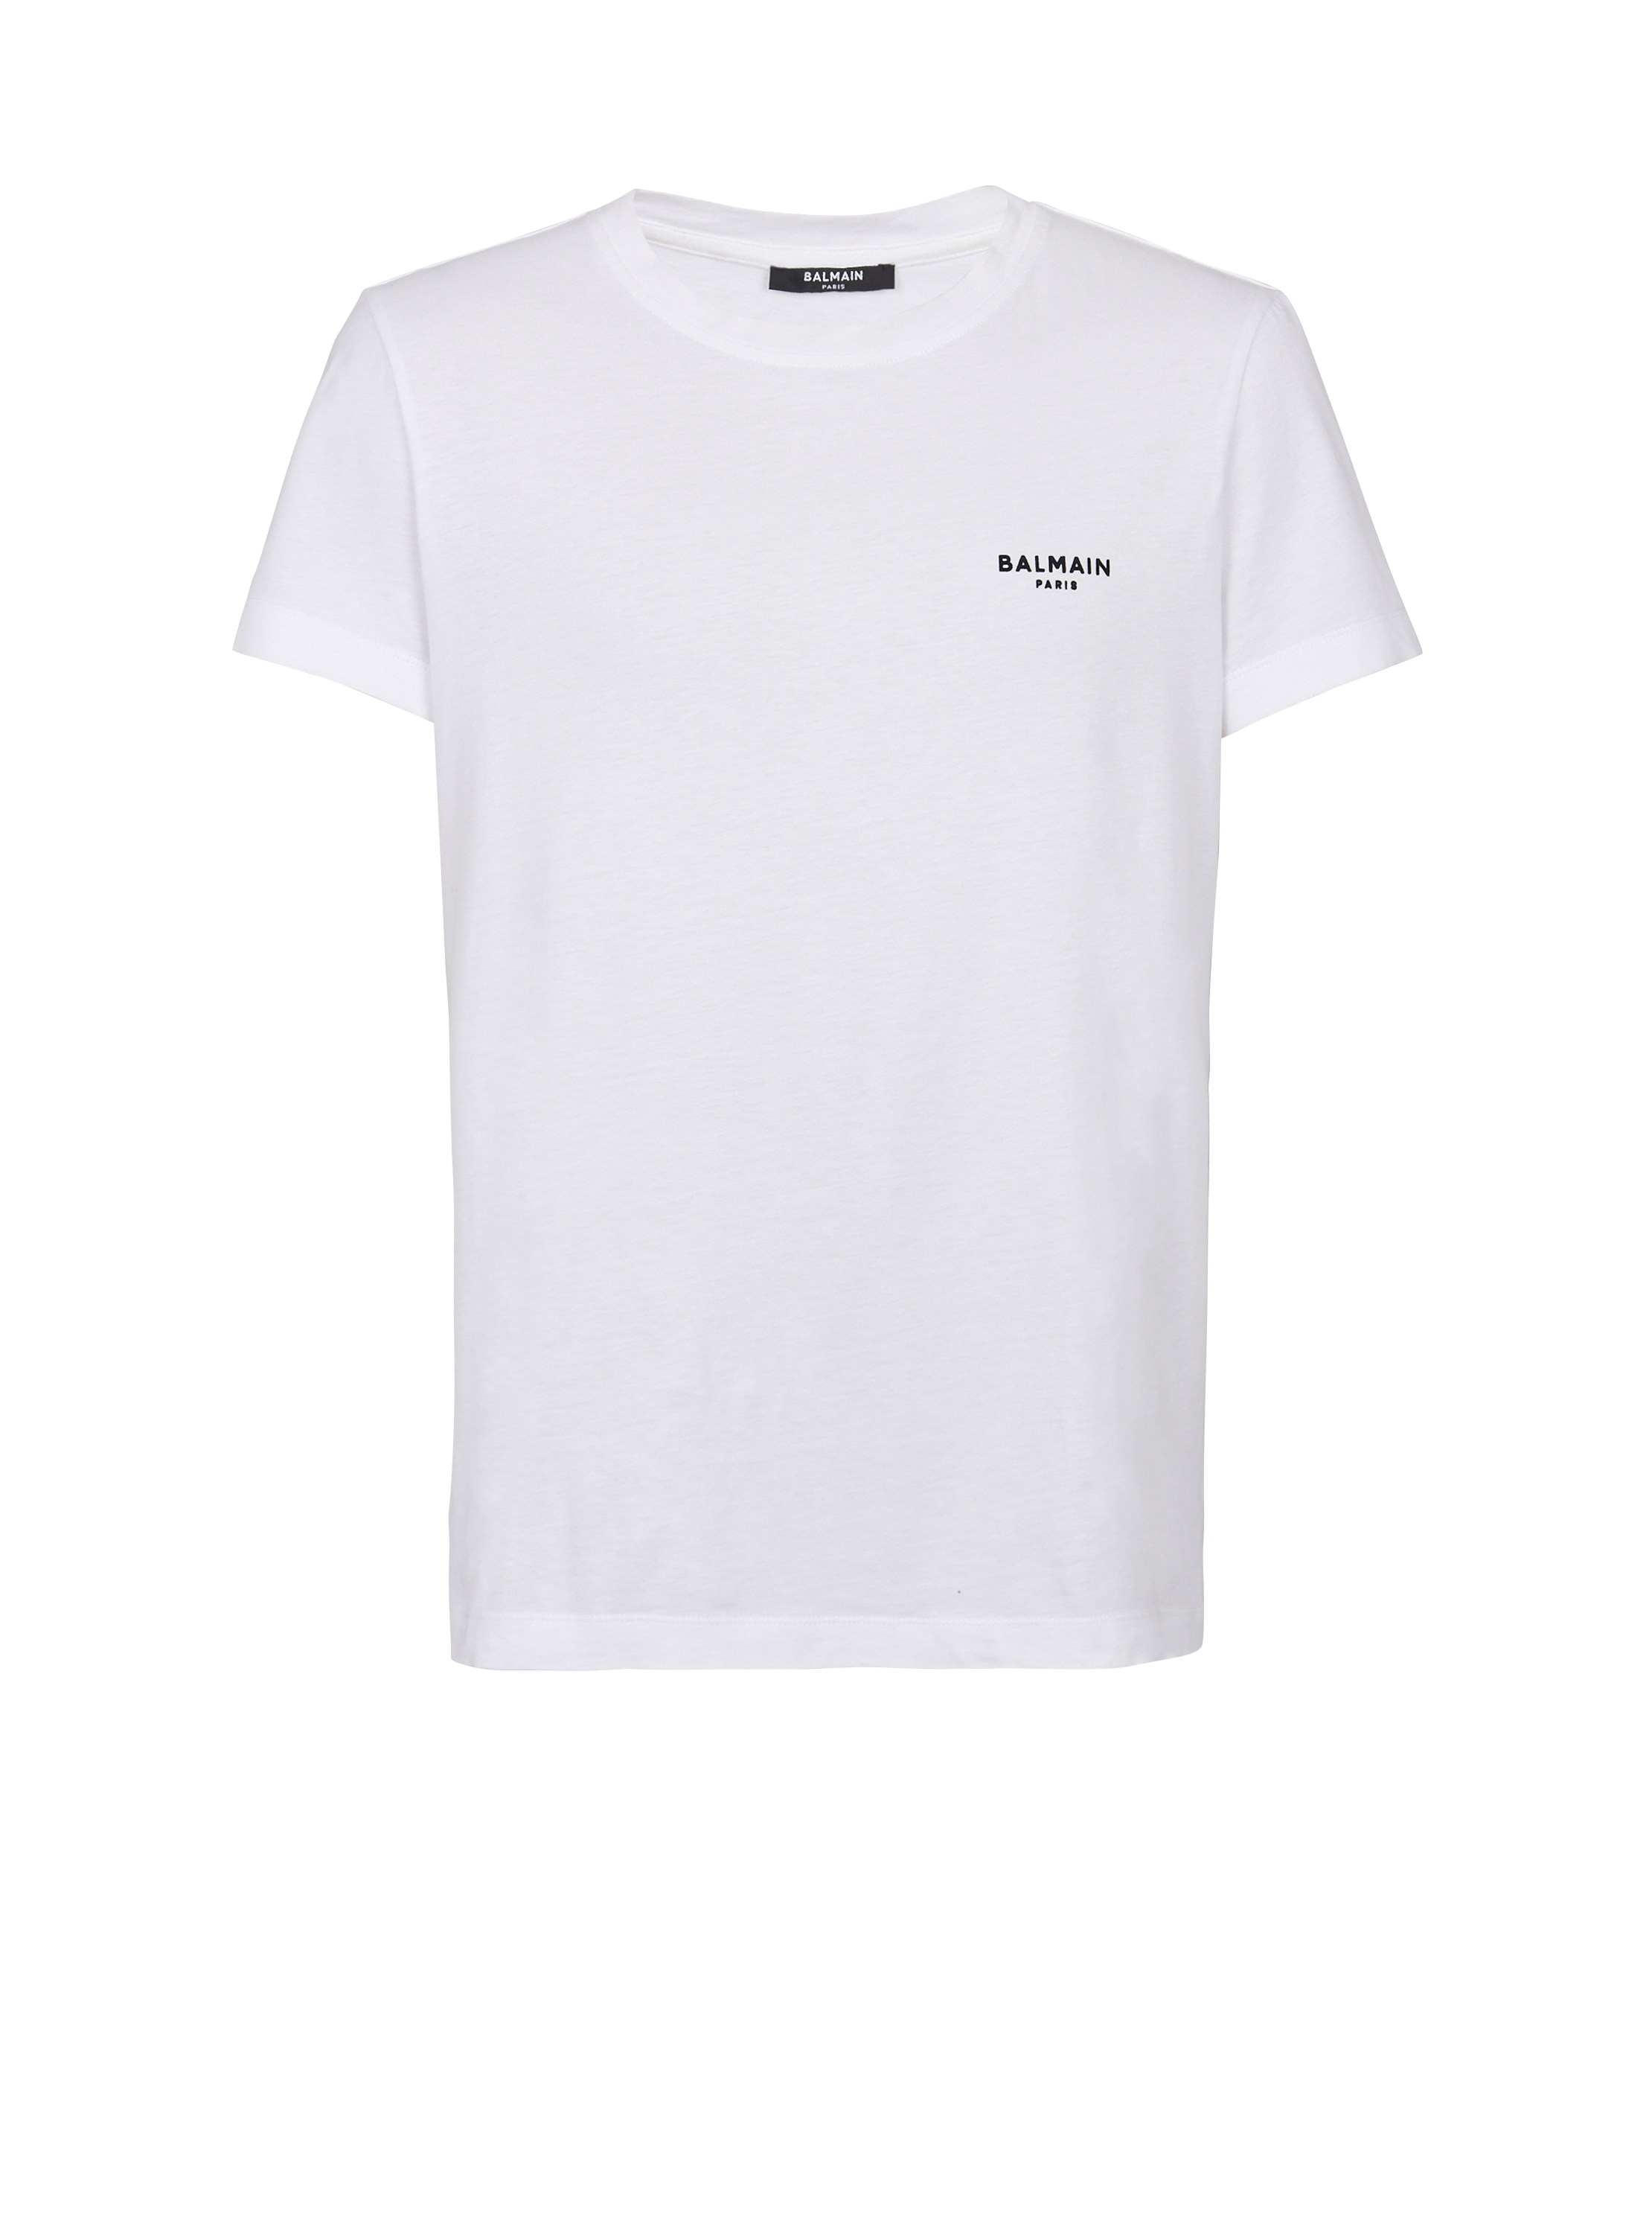 Gocco Shirt KIDS FASHION Shirts & T-shirts Elegant discount 95% White 